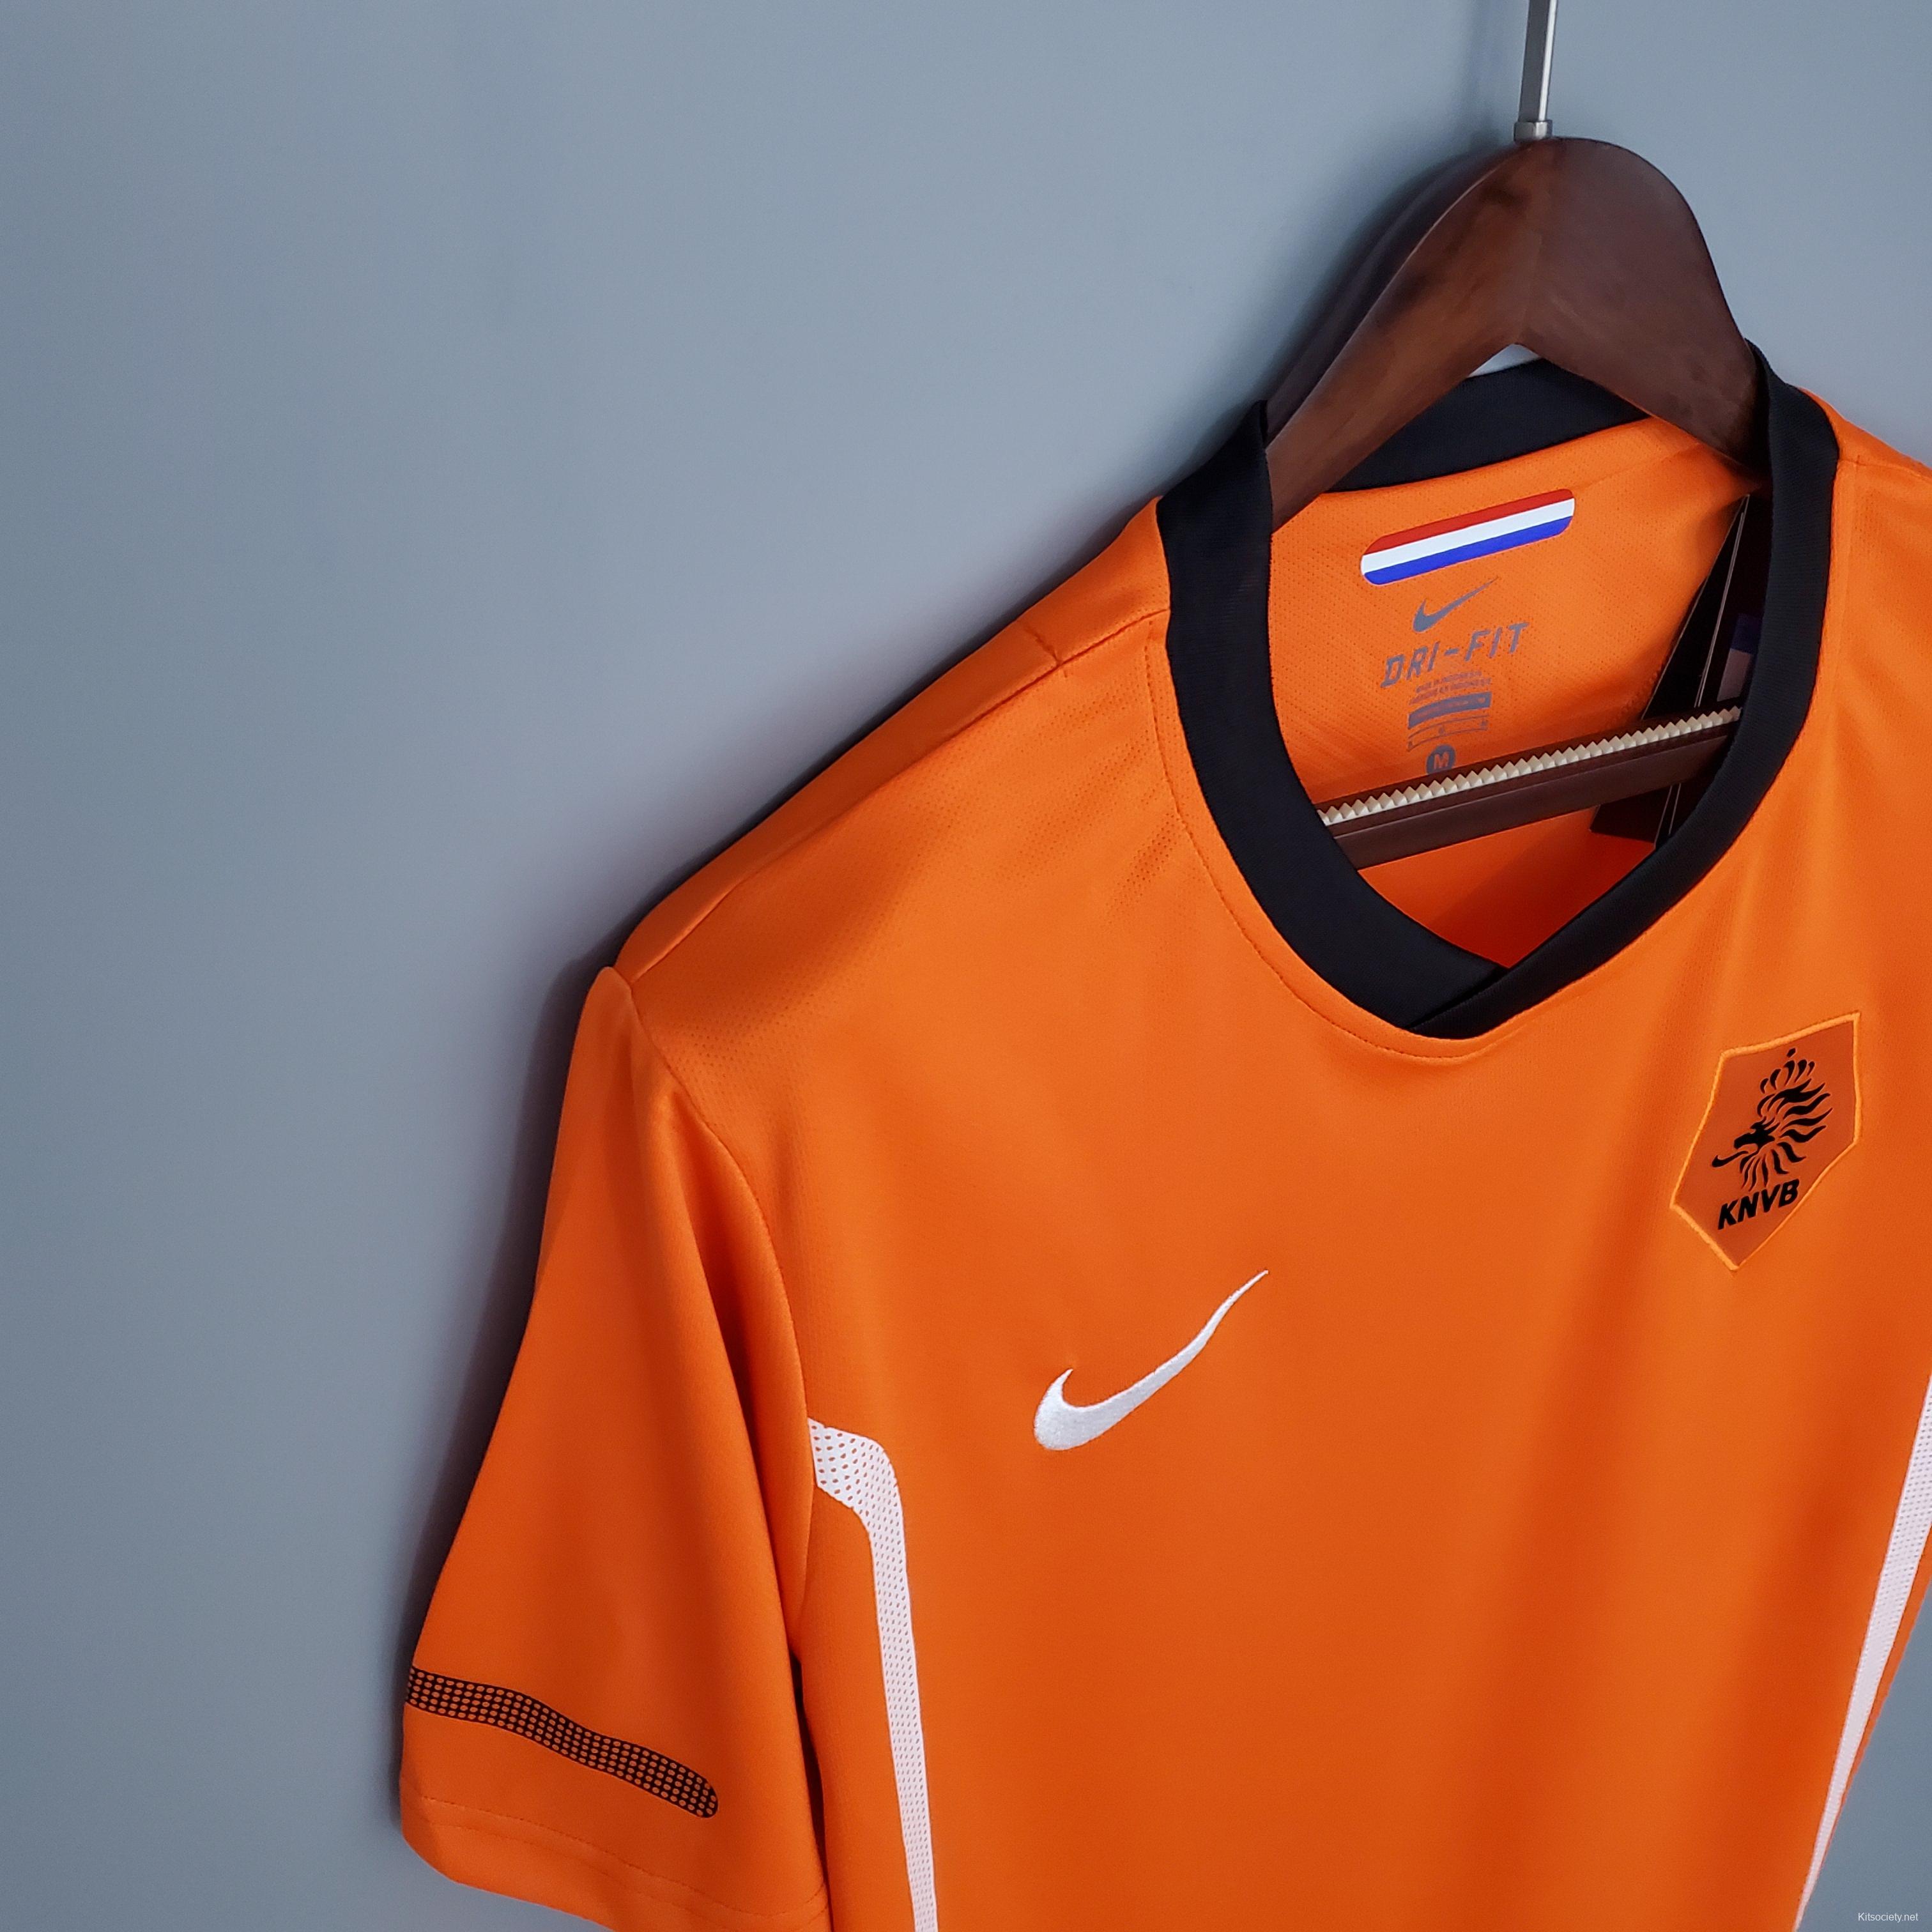 2022 Netherlands World Cup Shirt Away Soccer Jersey - Kitsociety